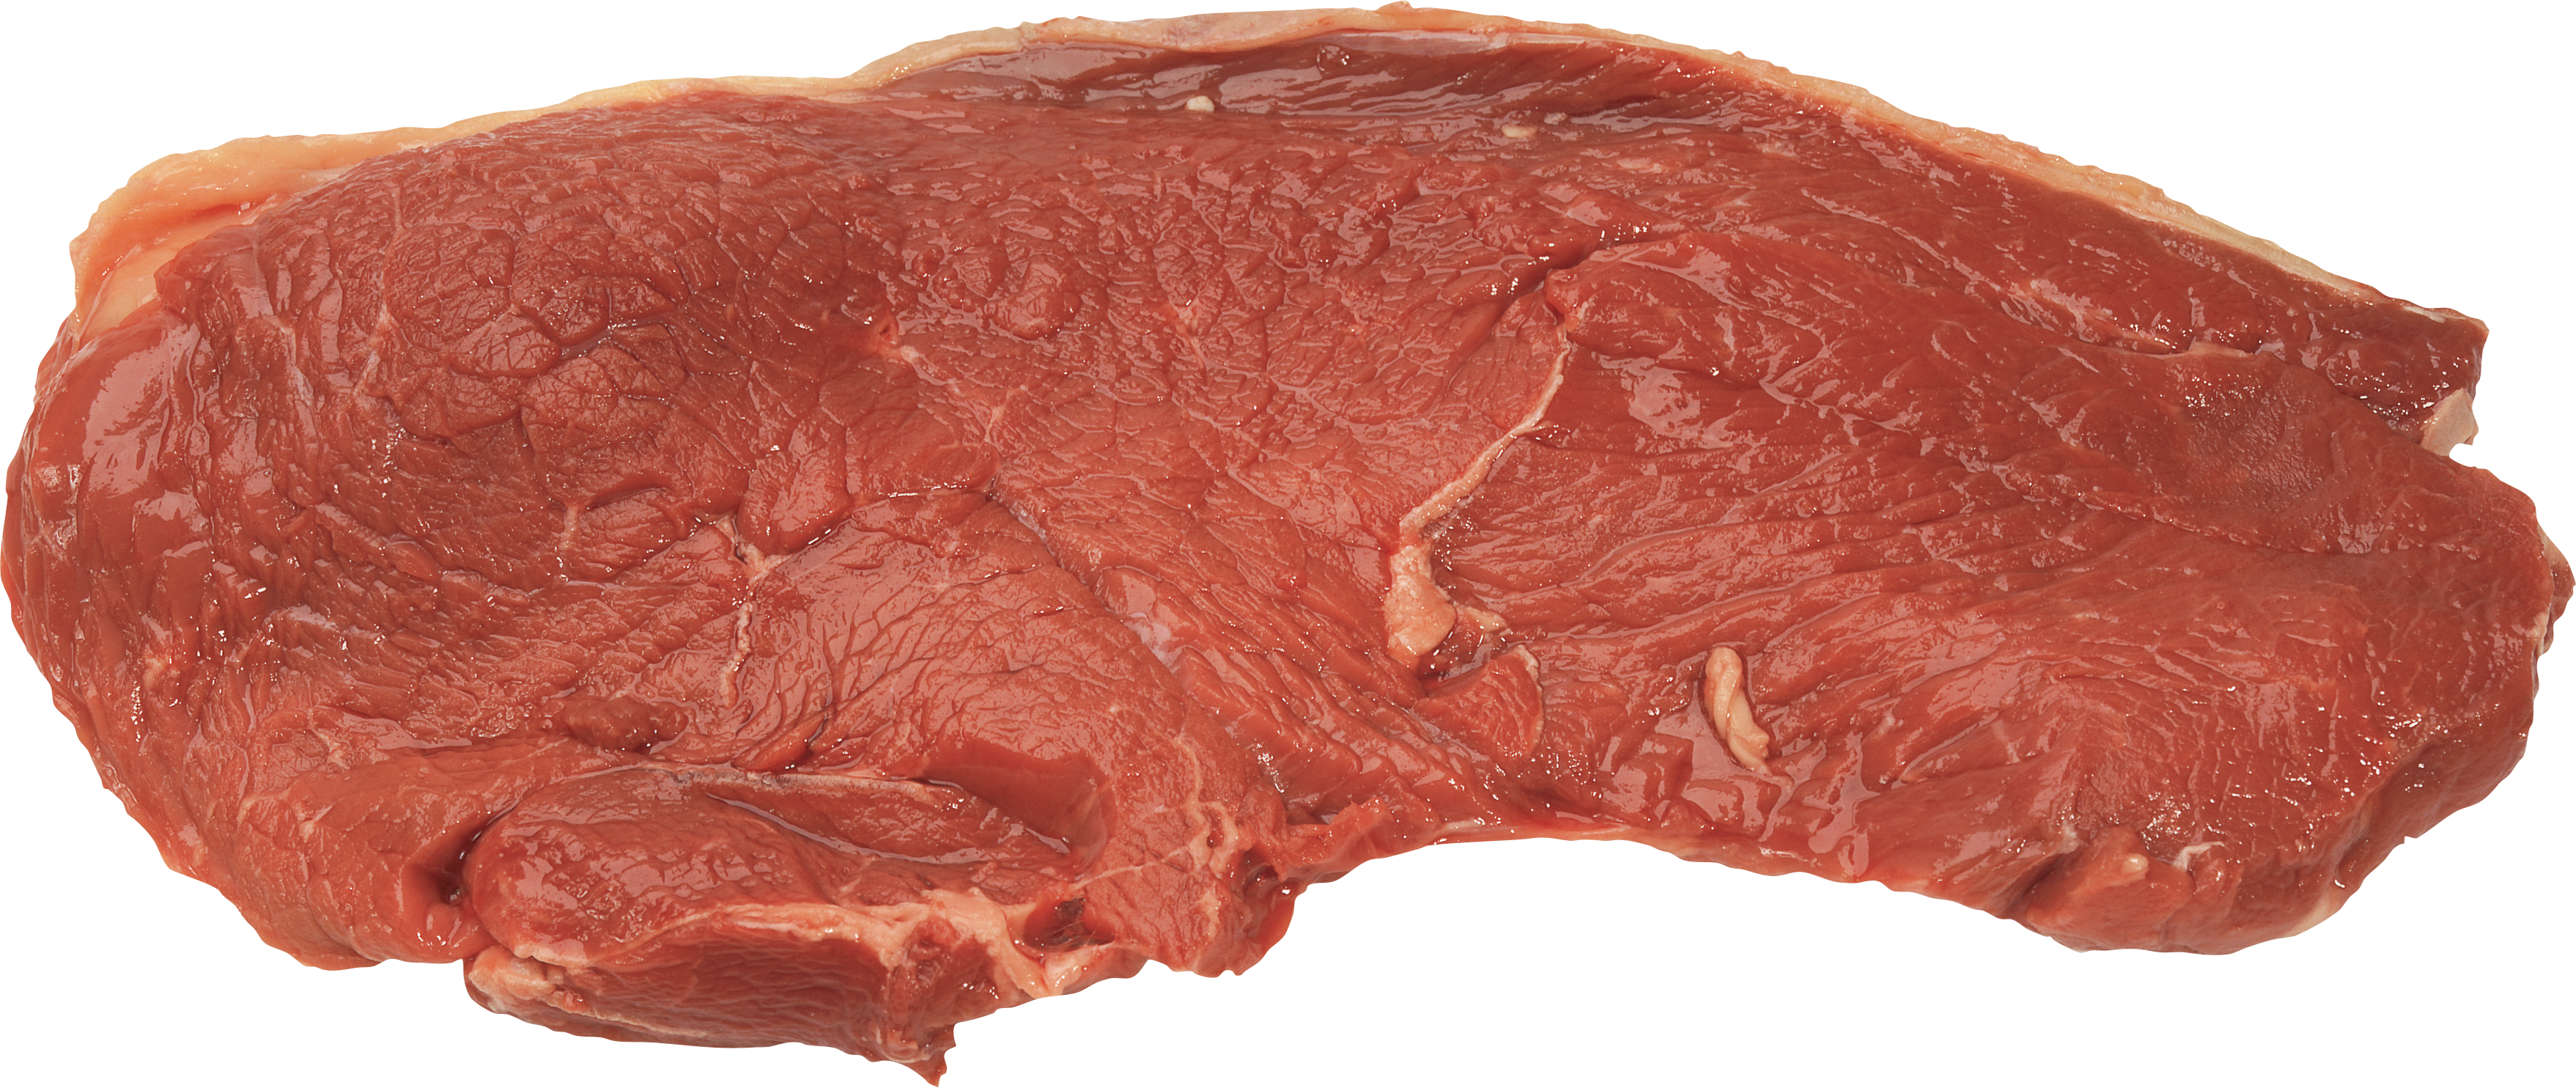 Meats HD PNG - 119417